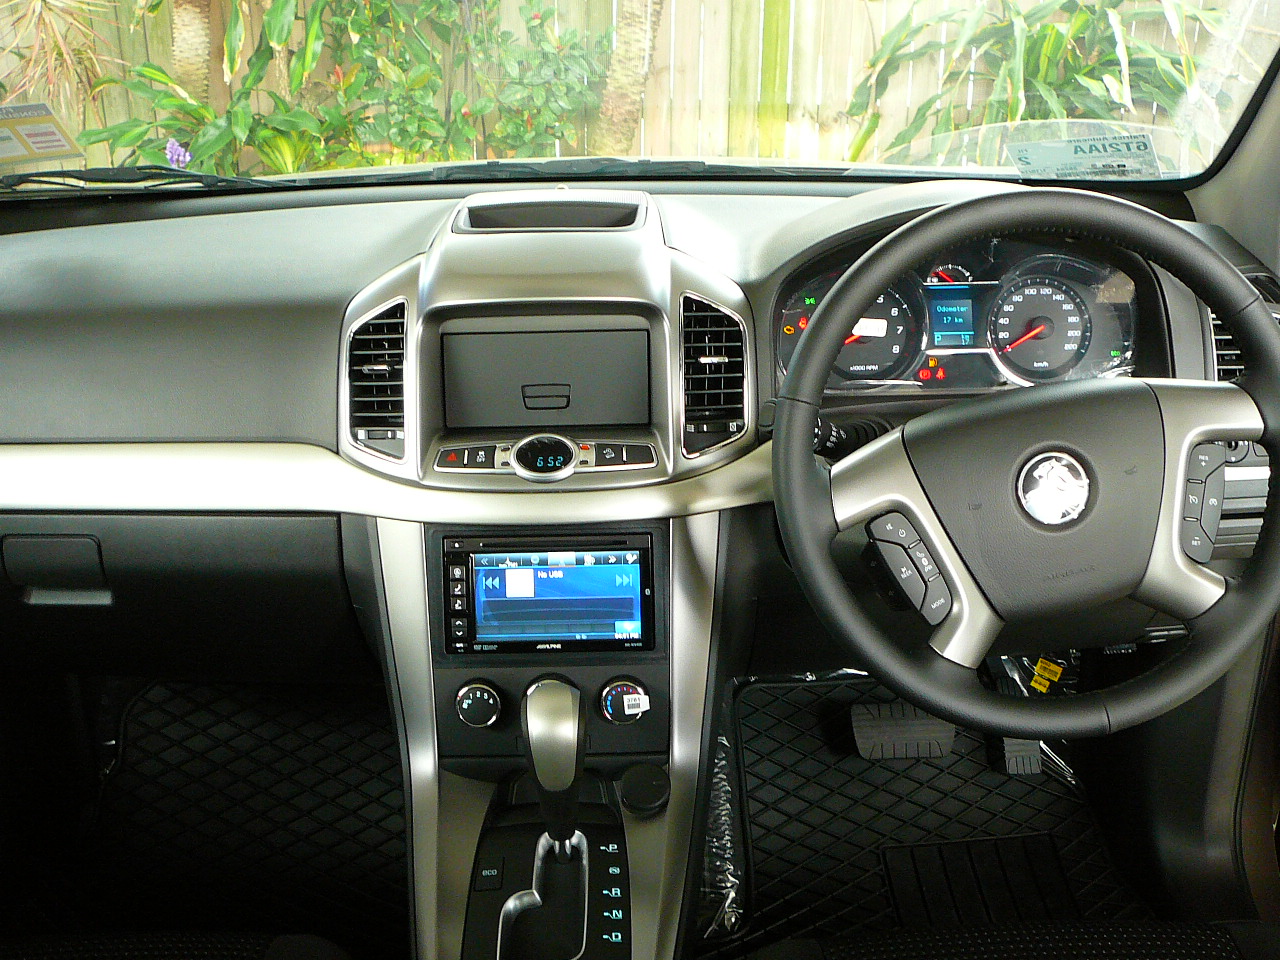 Holden Captiva Alpine INE-W940 GPS Navigation & Reverse Camera Installation